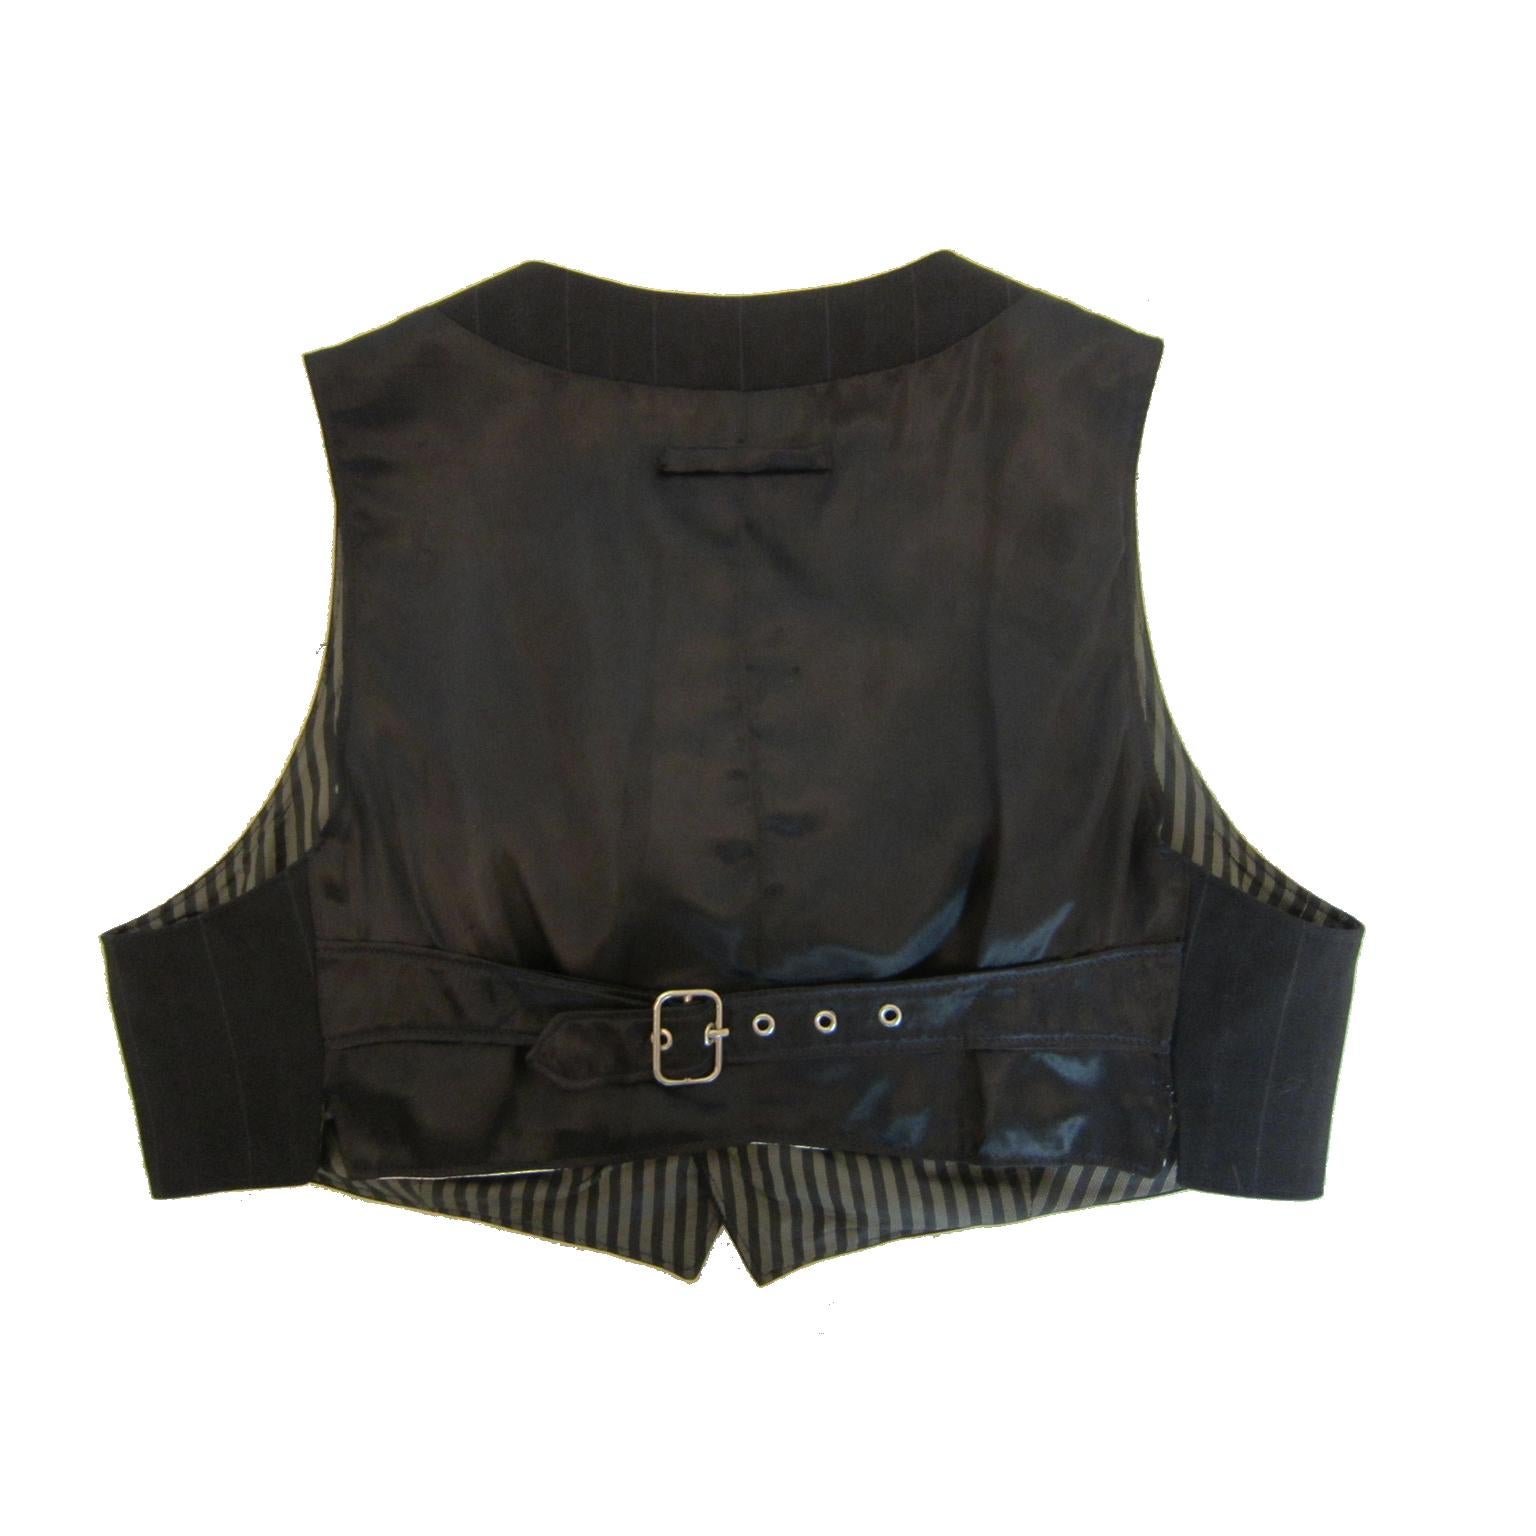 Jean Paul Gaultier Femme dark navy pin stripe short vest / gilet from circa mid 90s.
Measurements :
Under arm : 43 cm
Length back : 30 cm 